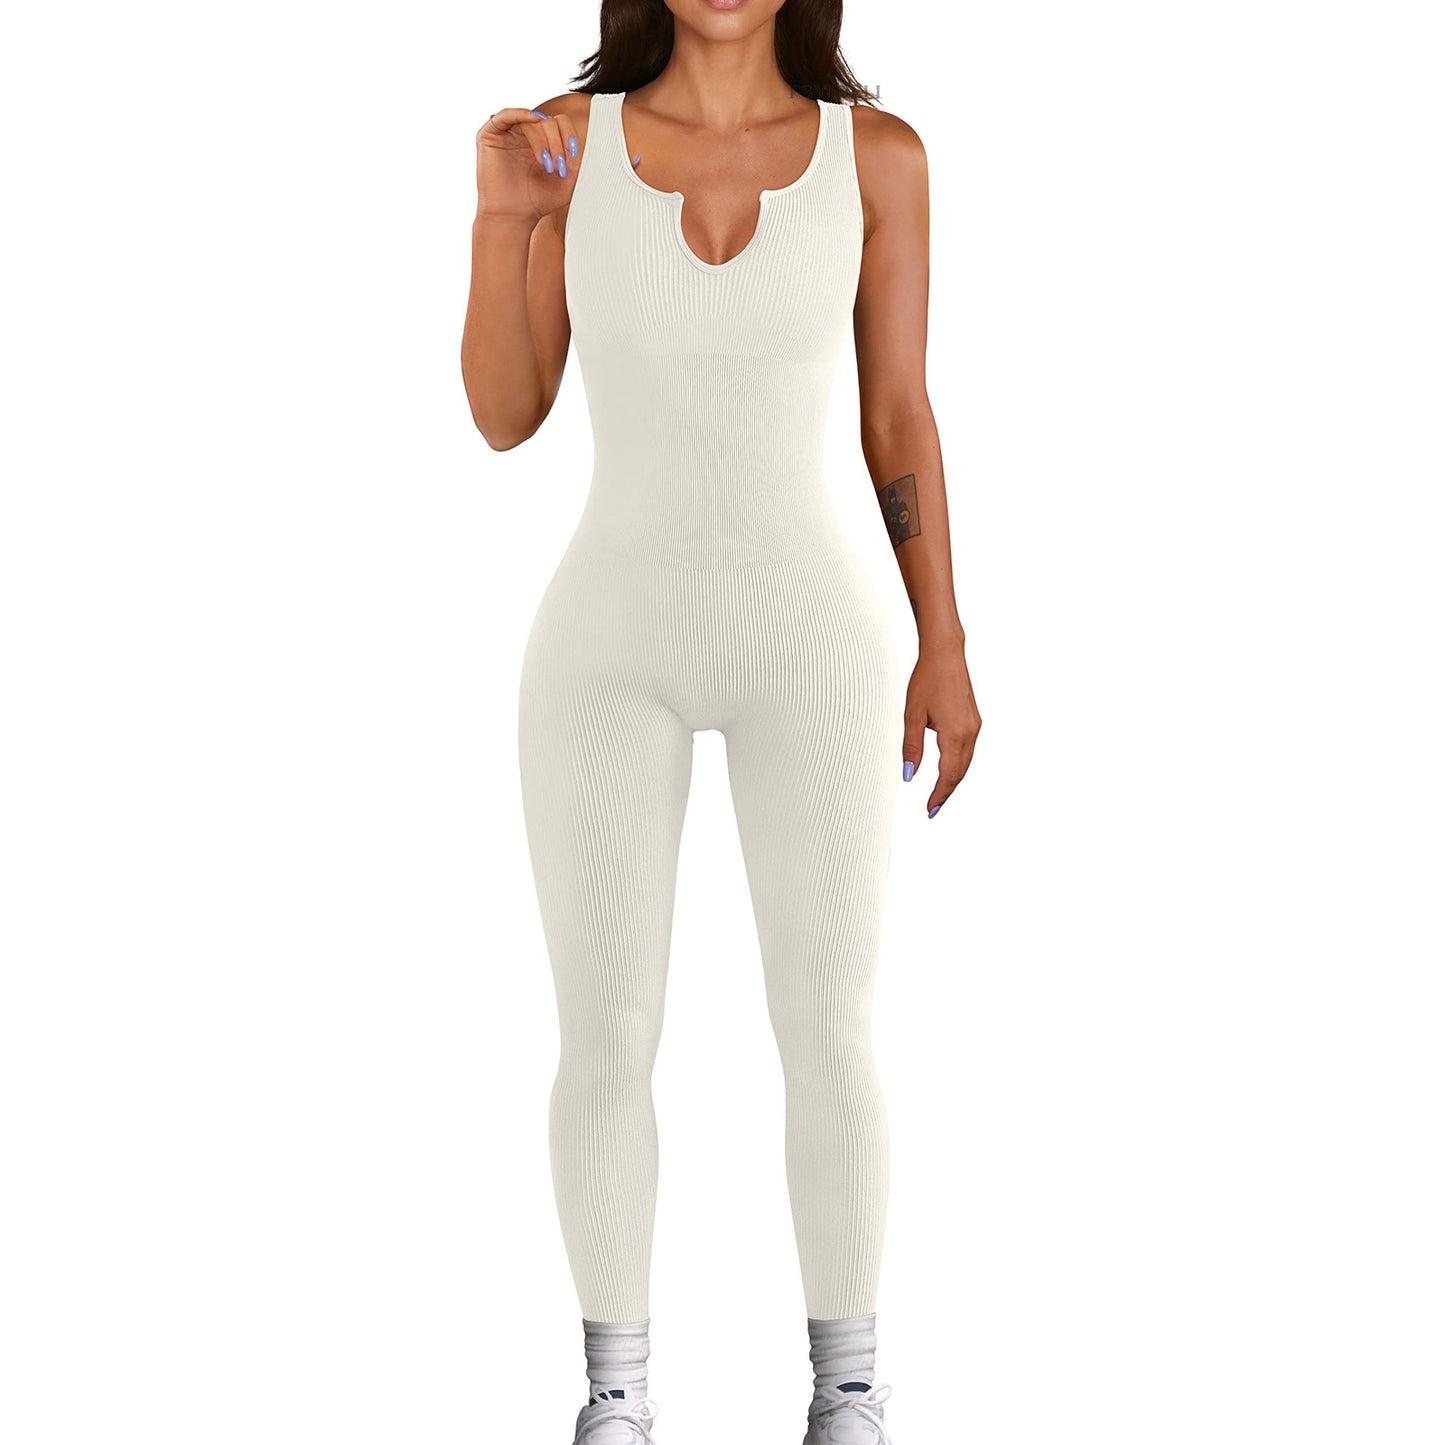 Women's sleeveless jumpsuit with high elastic thread